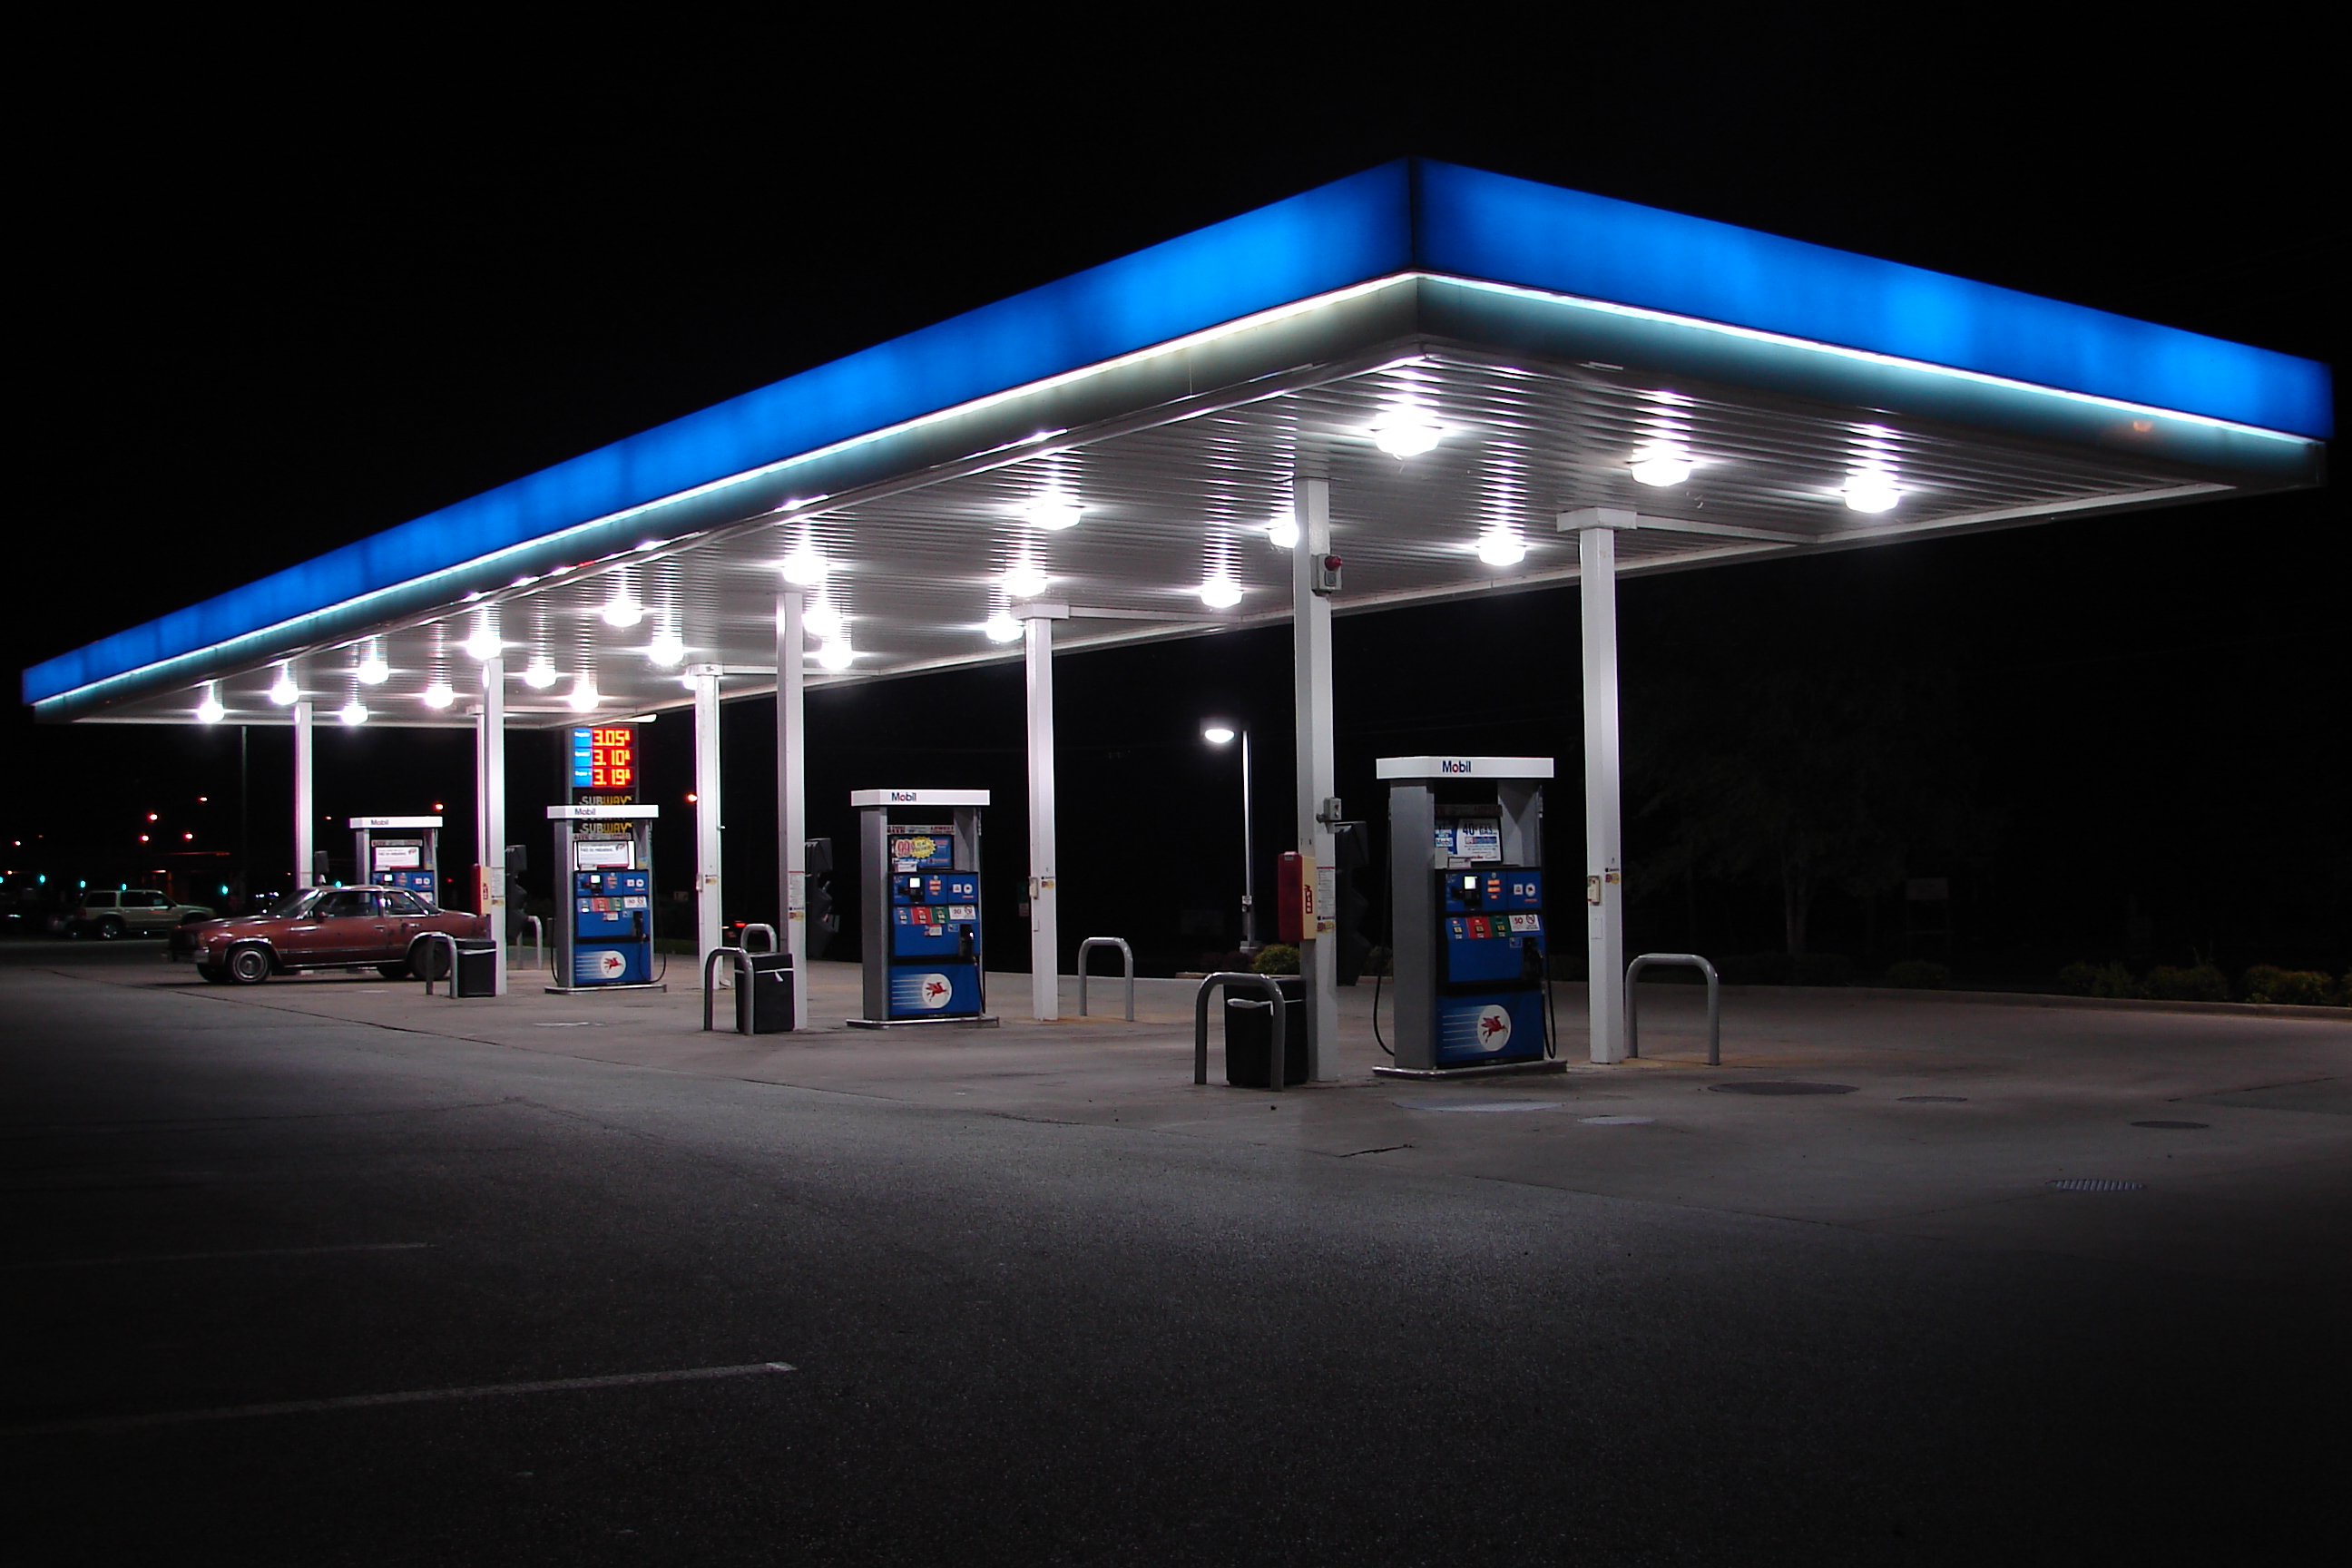 Gas Station Pumps at Night 1 by FantasyStock on DeviantArt